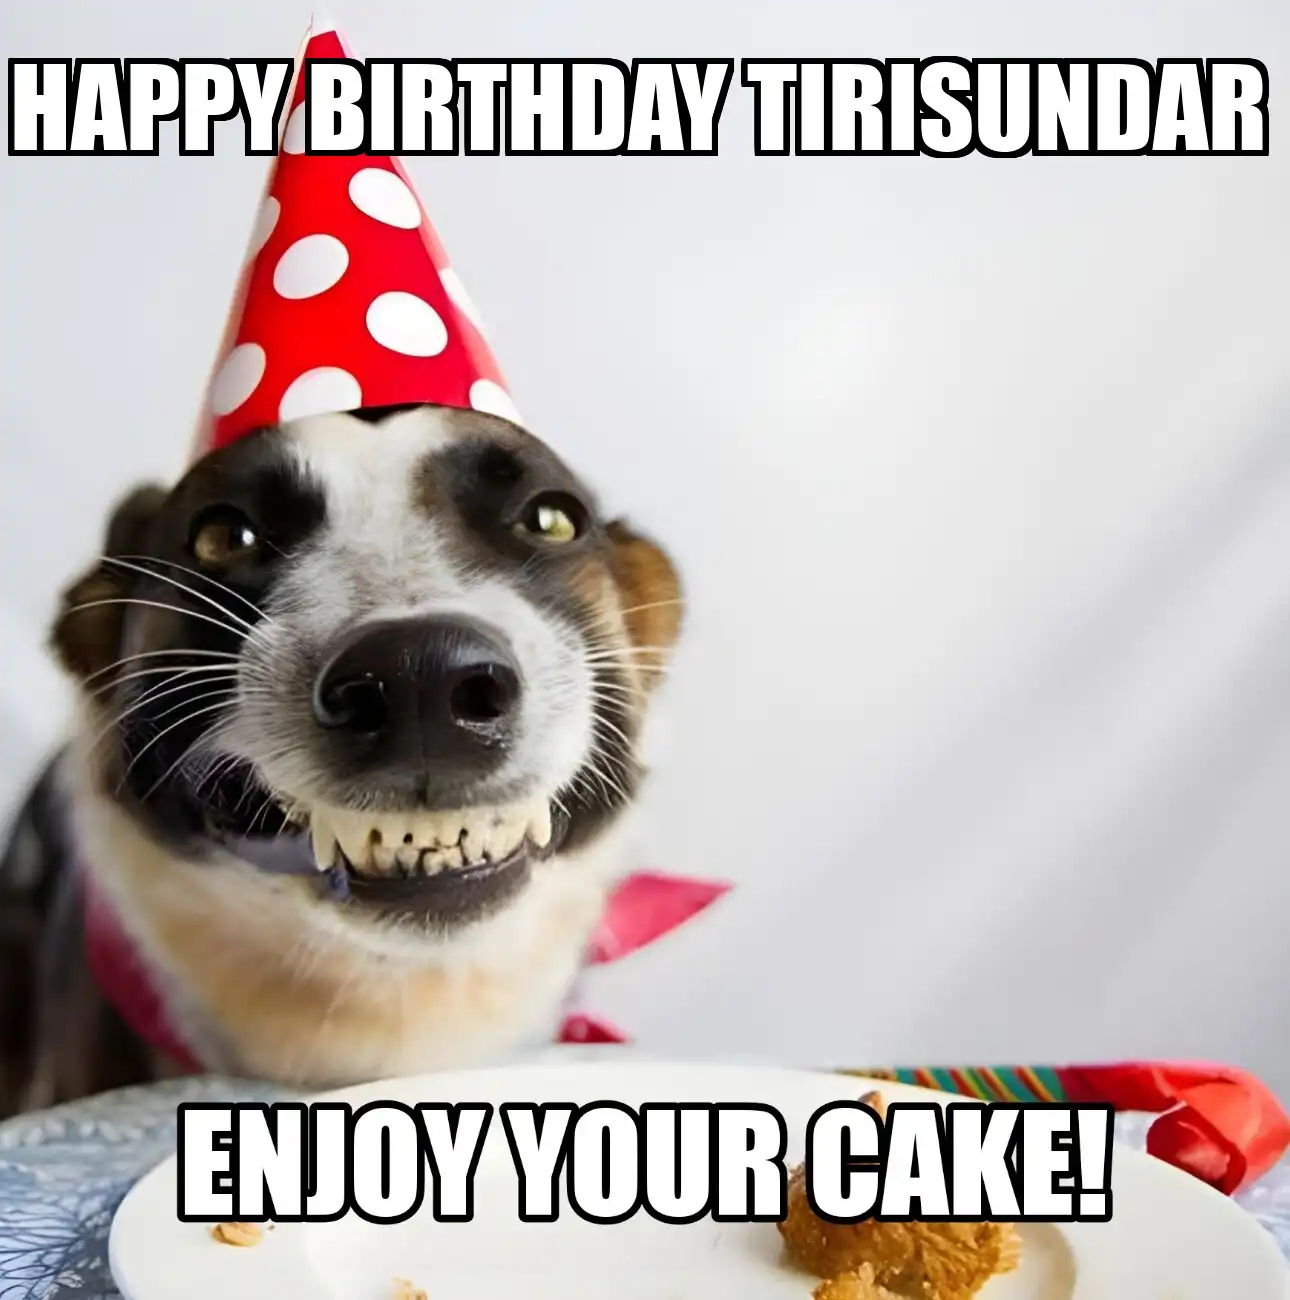 Happy Birthday Tirisundar Enjoy Your Cake Dog Meme